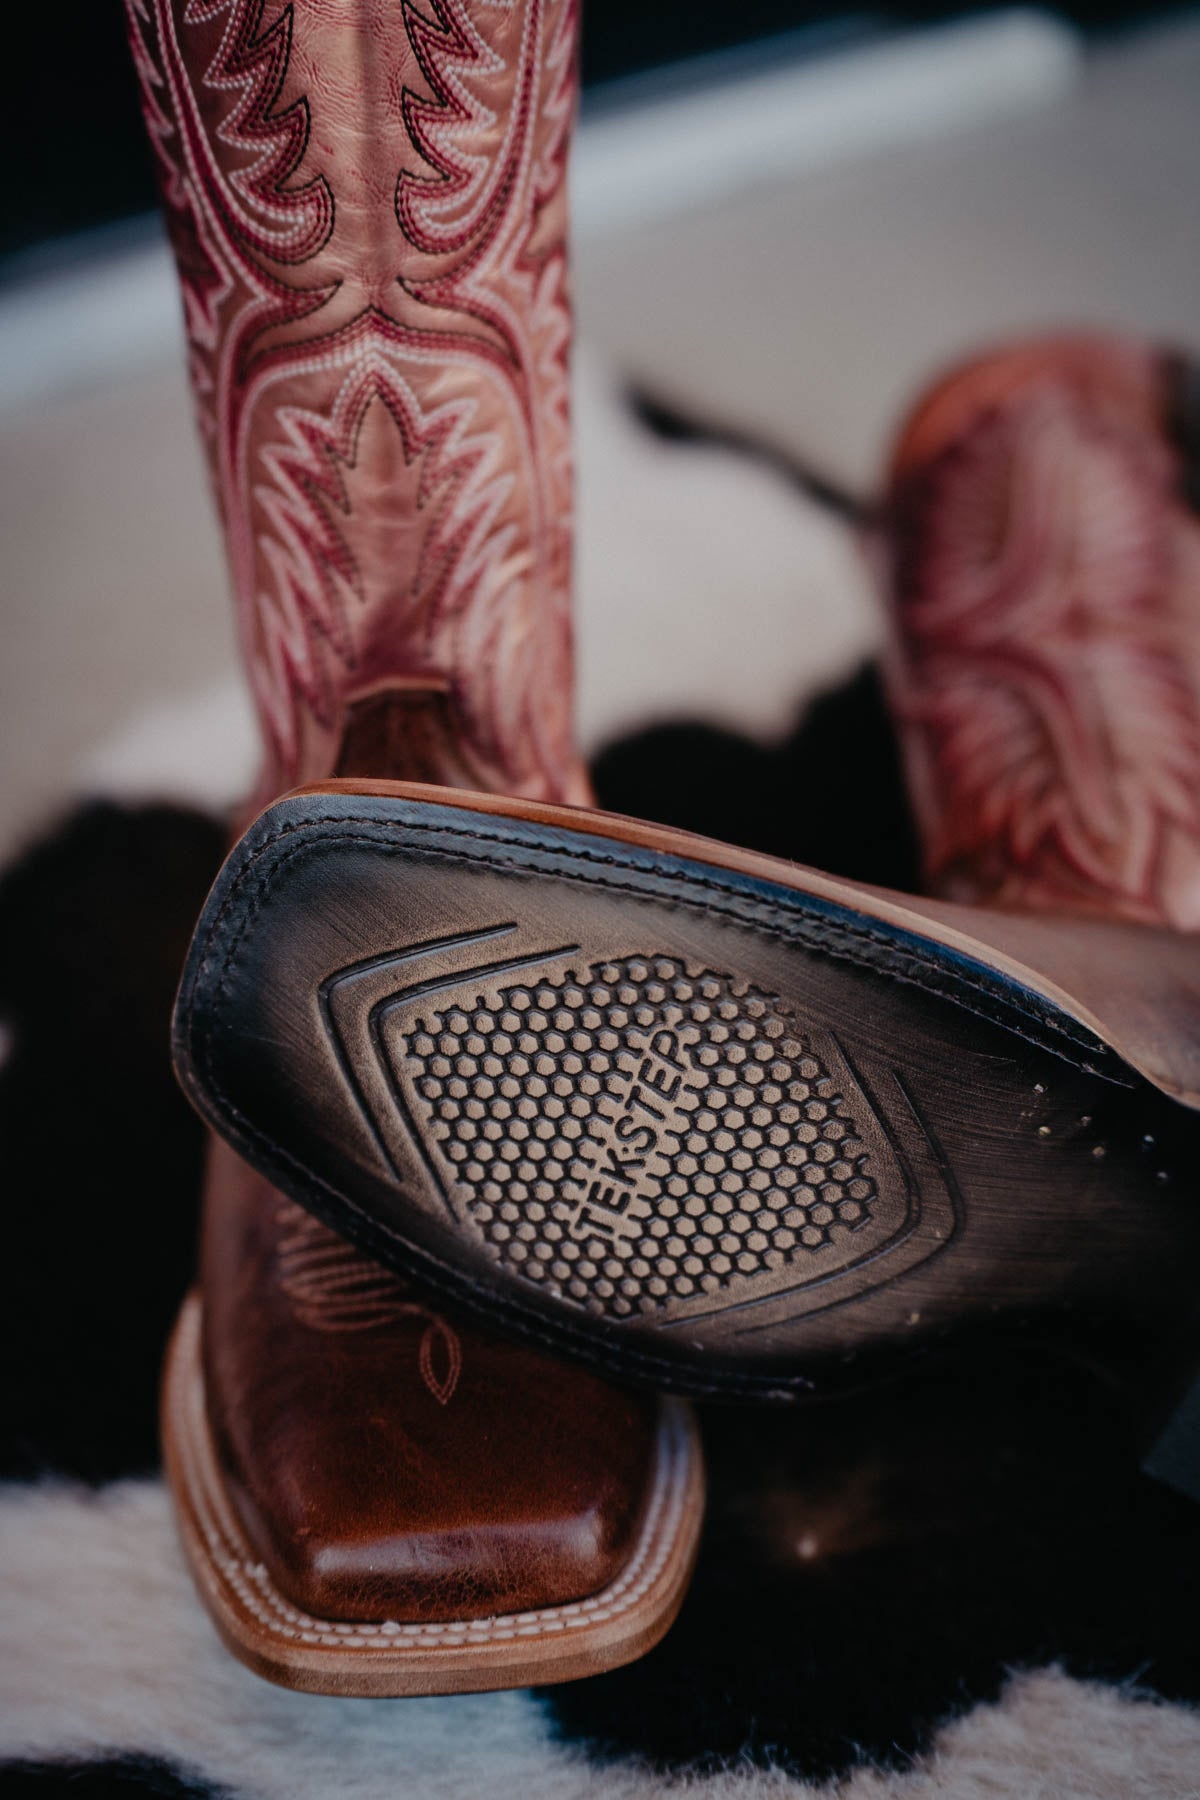 Ariat 'Frontier Calamity Jane' Western Boot - Metallic Desert Sunrise (Sizes 6-10, B & C Widths)